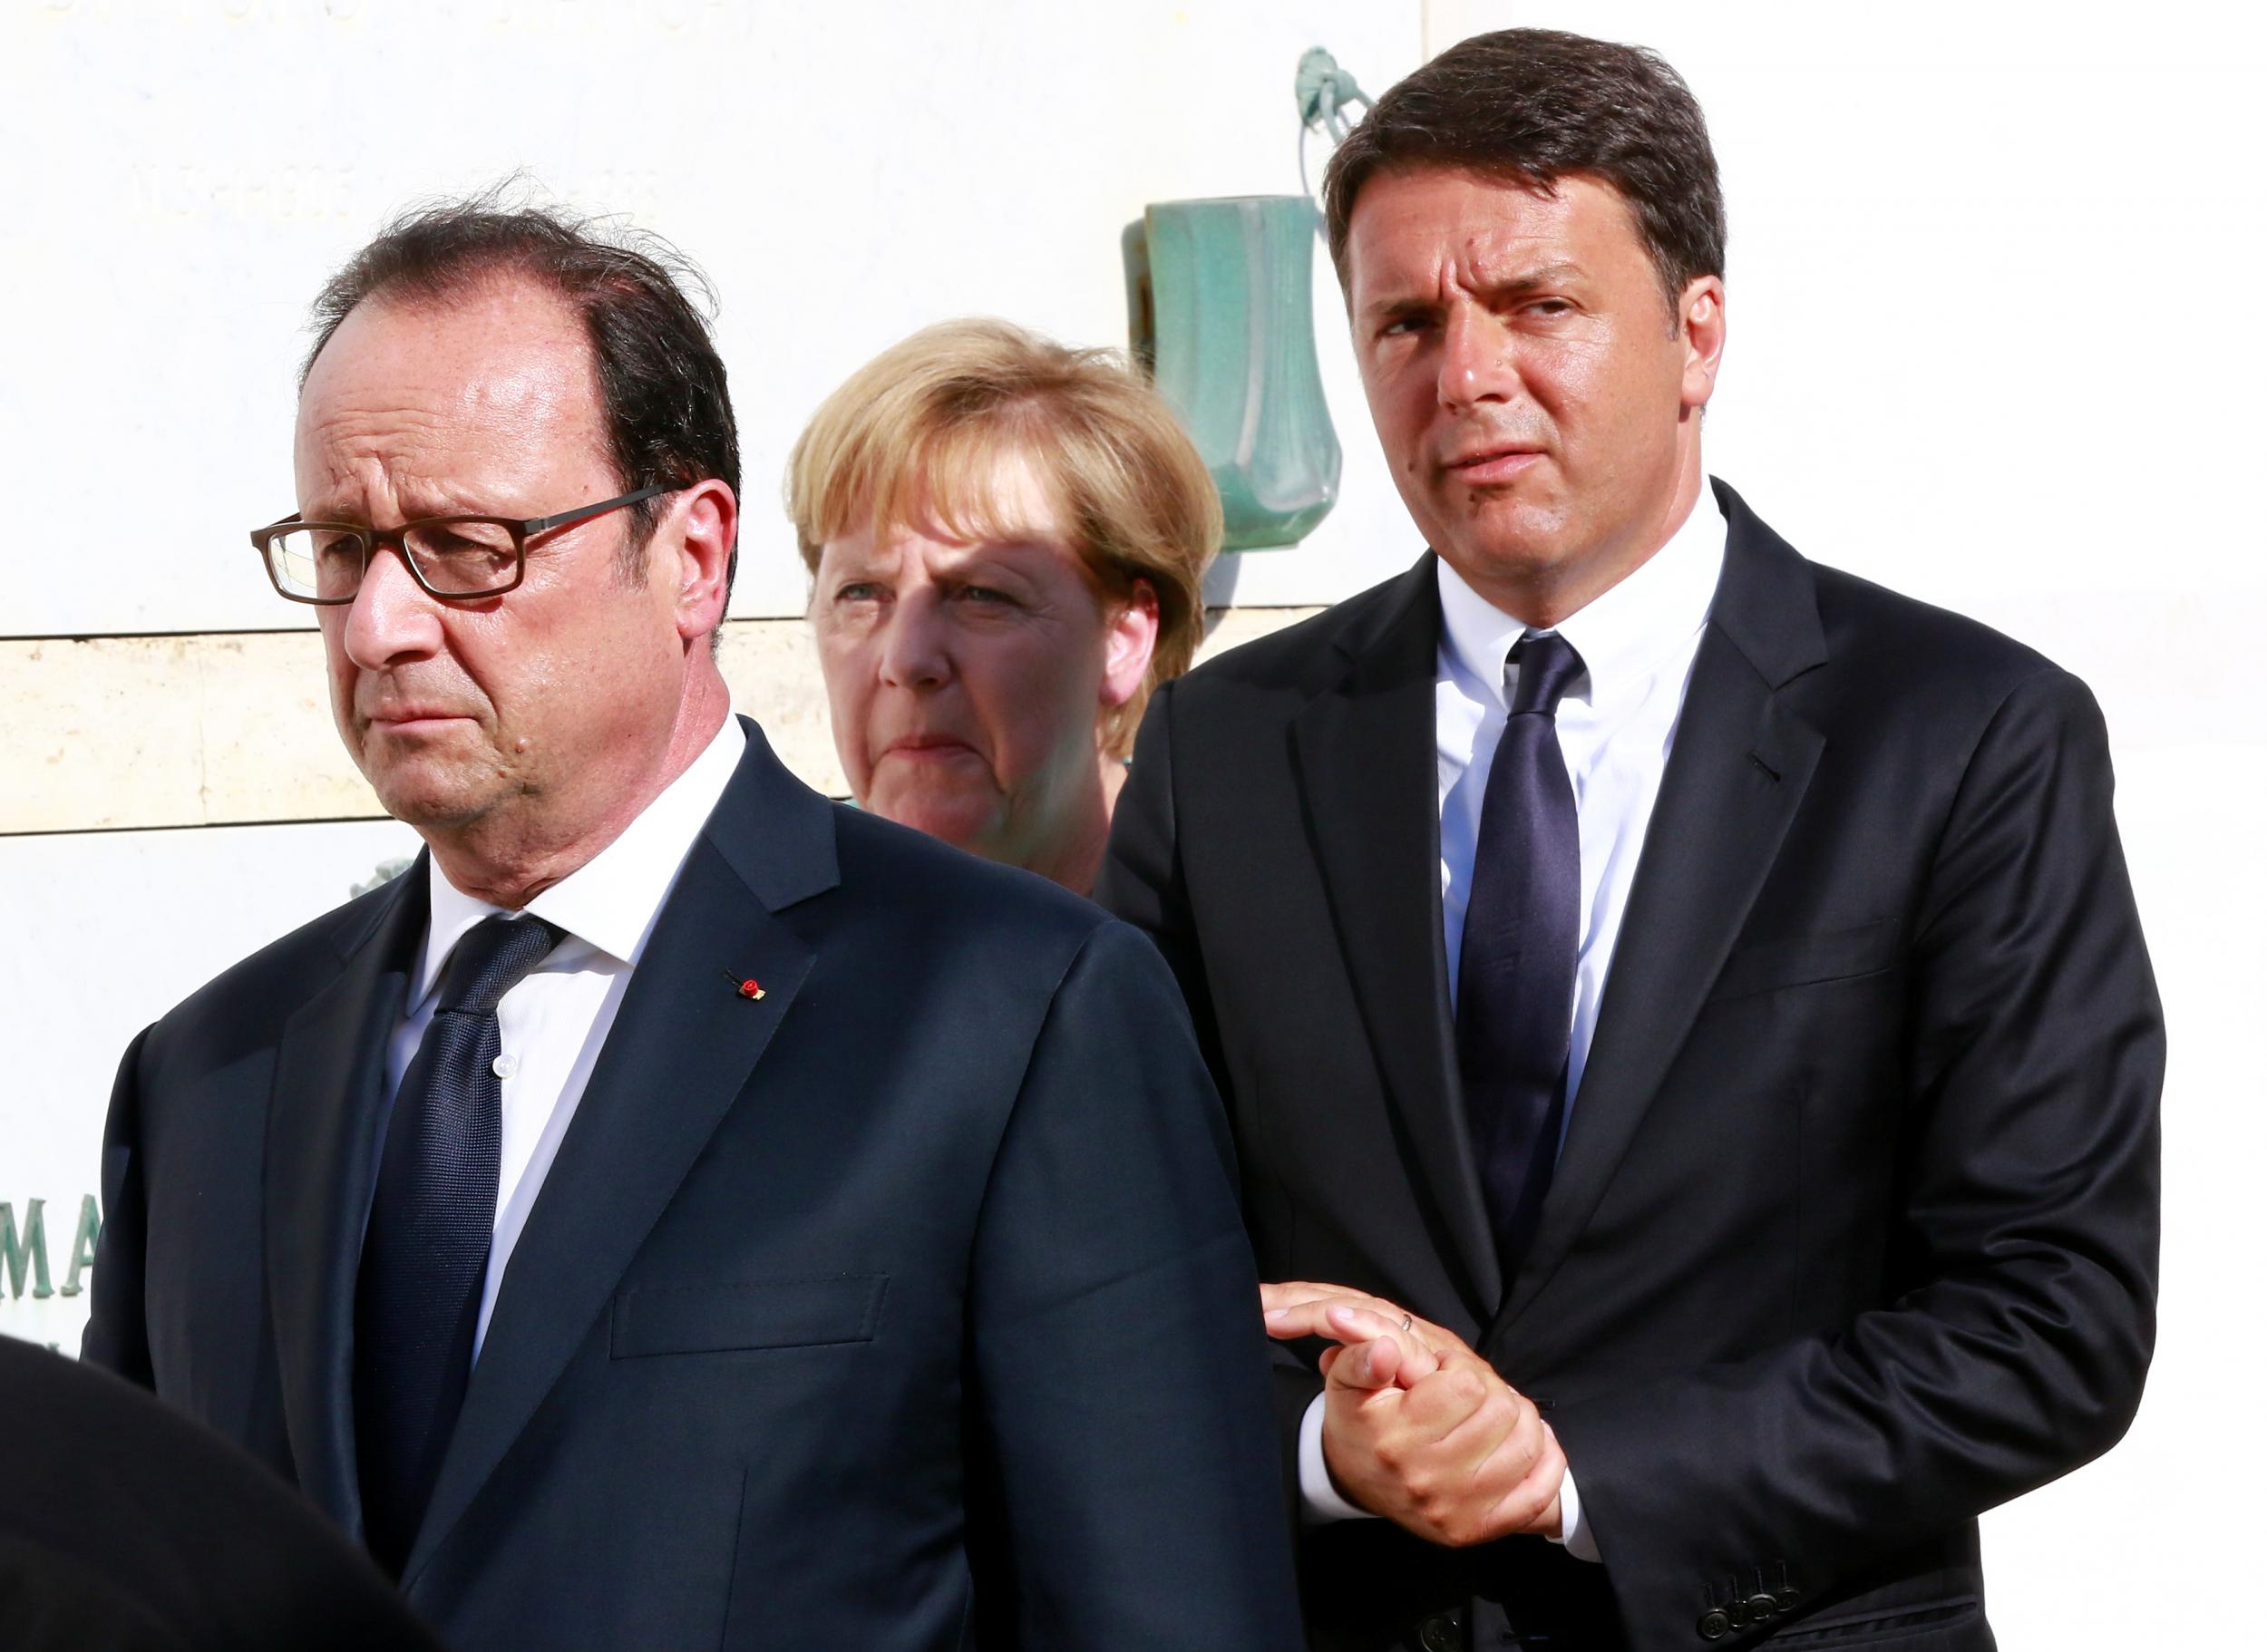 French President Francois Hollande, German Chancellor Angela Merkel and Italian Prime Minister Matteo Renzi in central Italy